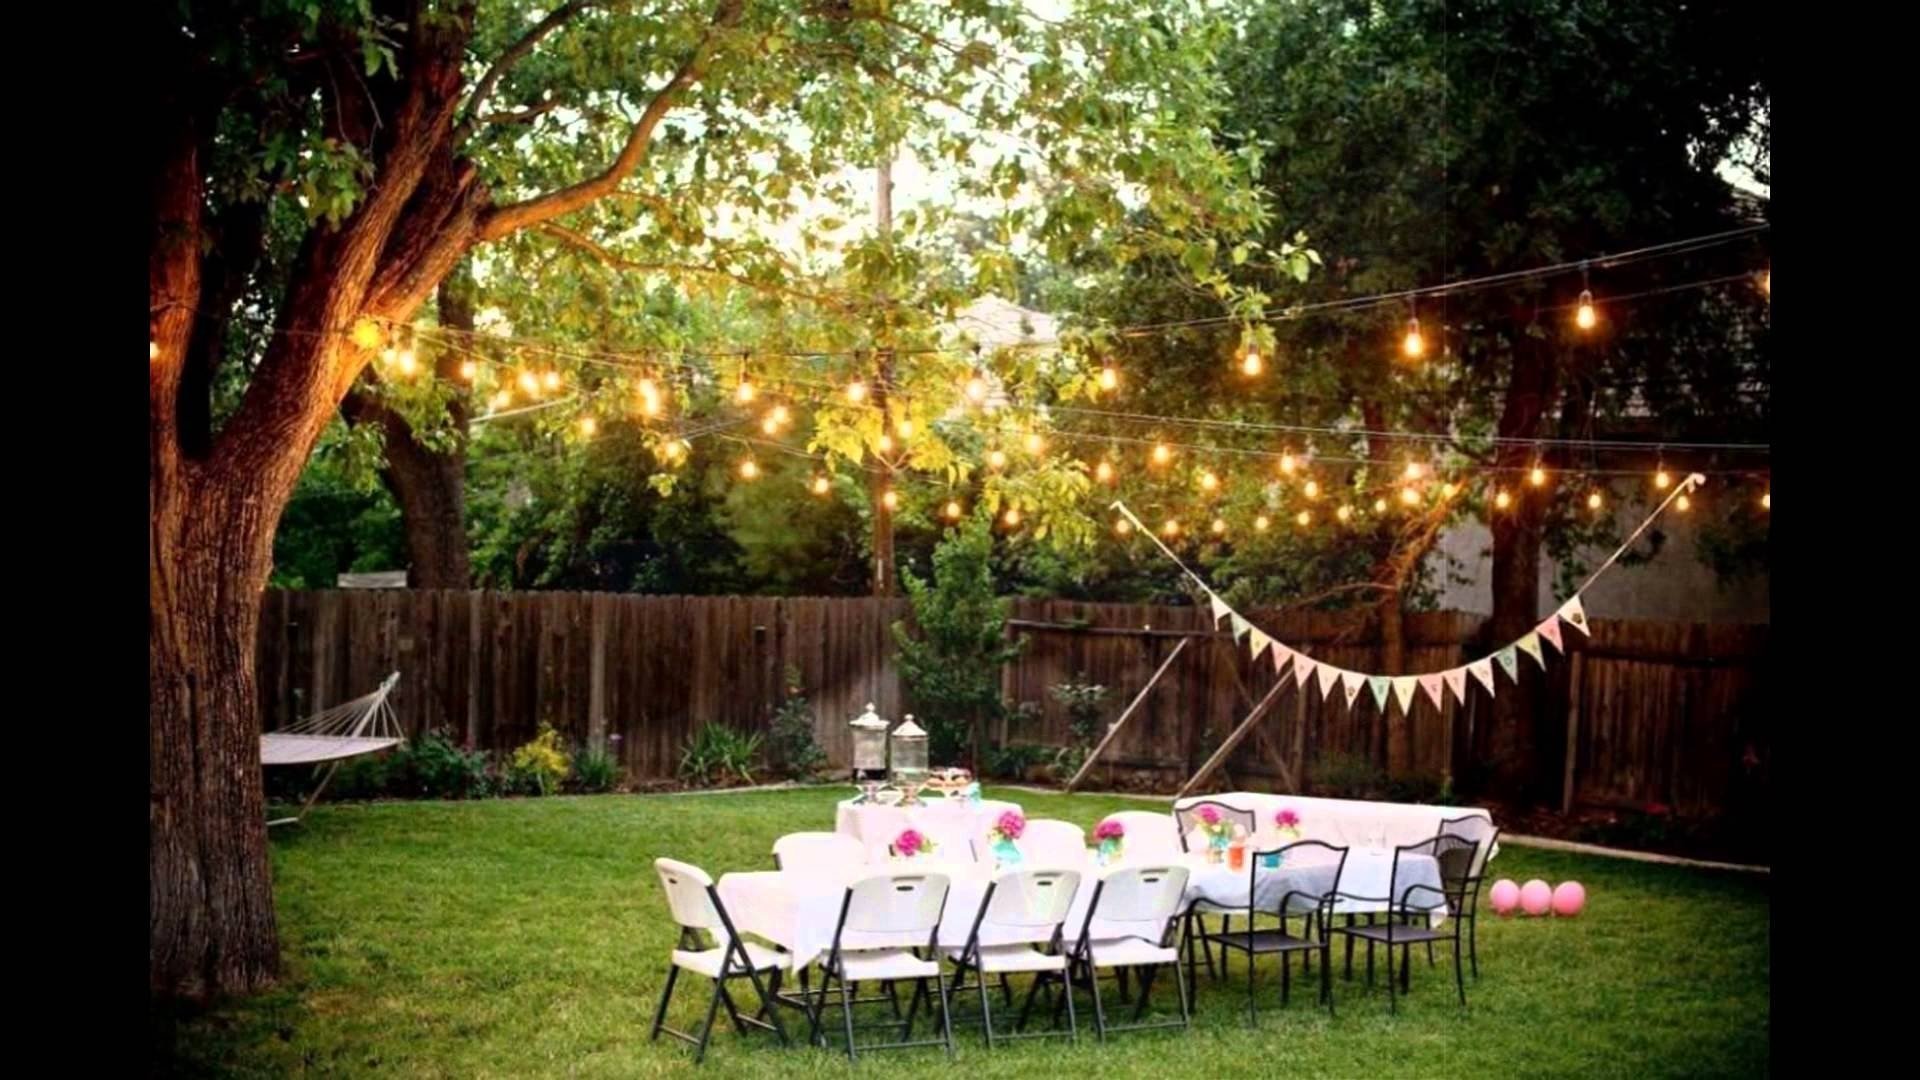 10 Cute Small Wedding Ideas On A Budget backyard weddings on a budget youtube 2 2022